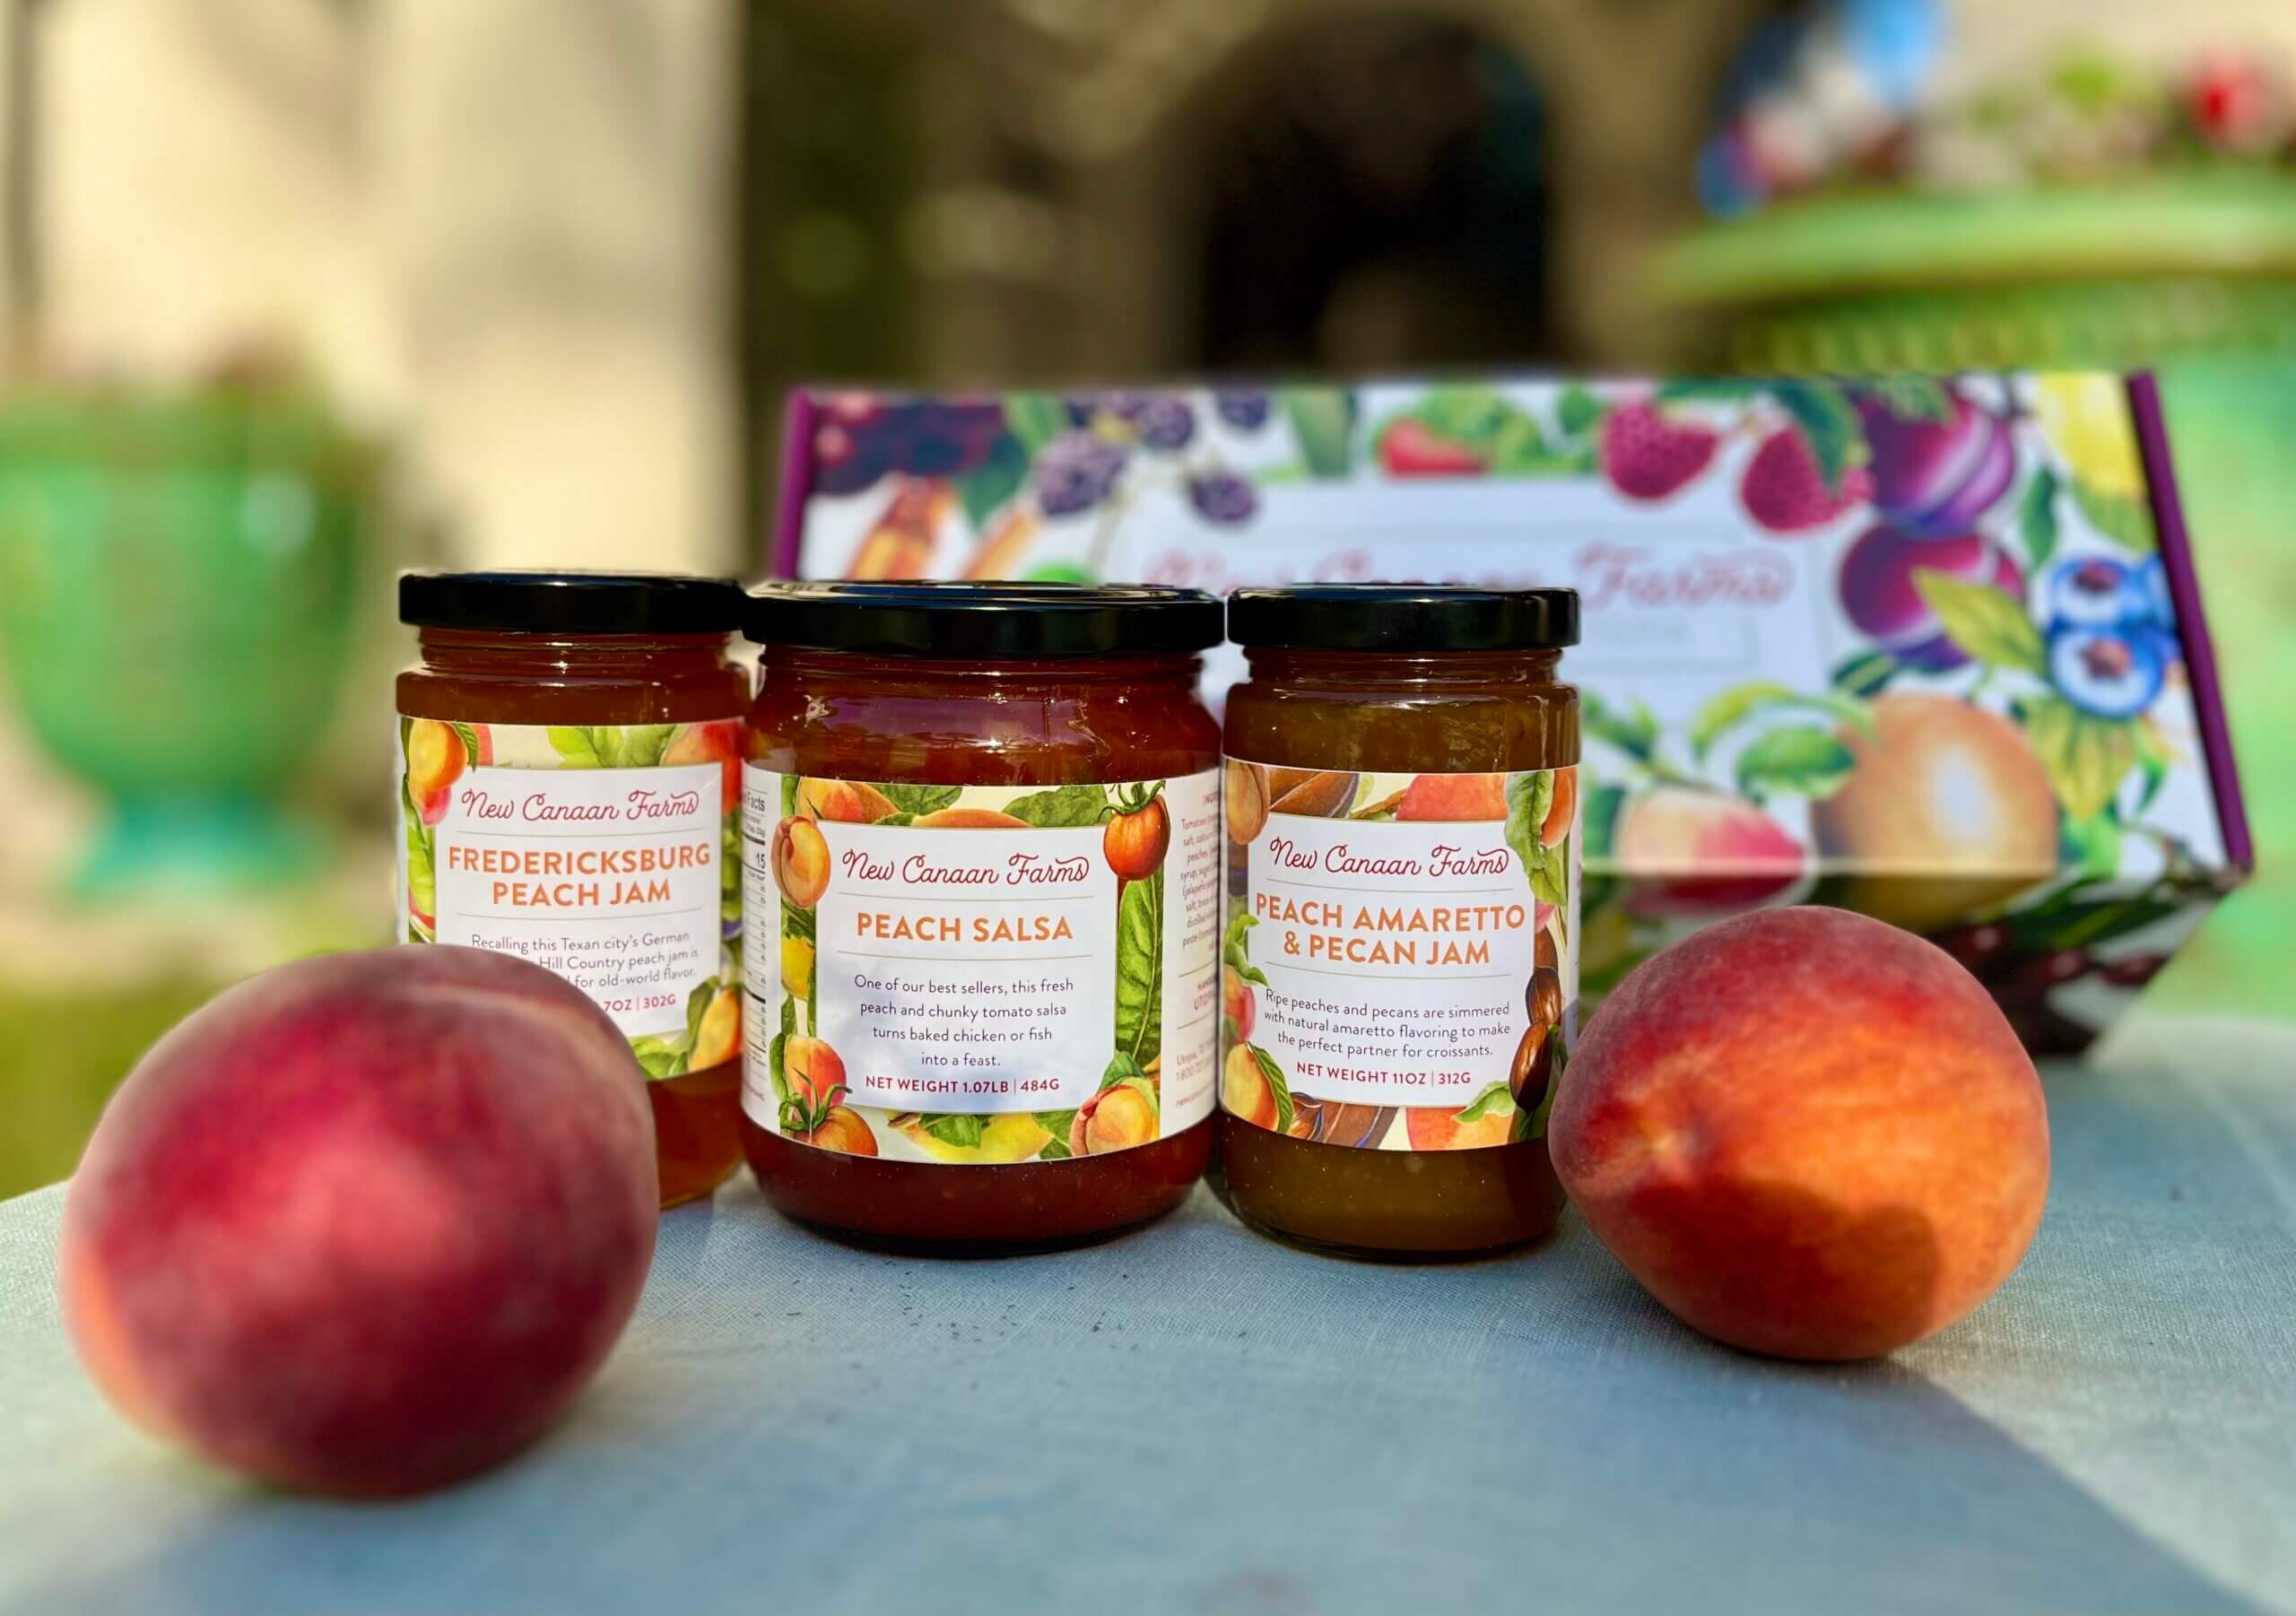 Our three New Canaan Farms peach products with their beautiful gift box; Fredericksburg Peach Jam, Peach Salsa and Peach Amaretto and Pecan Jam